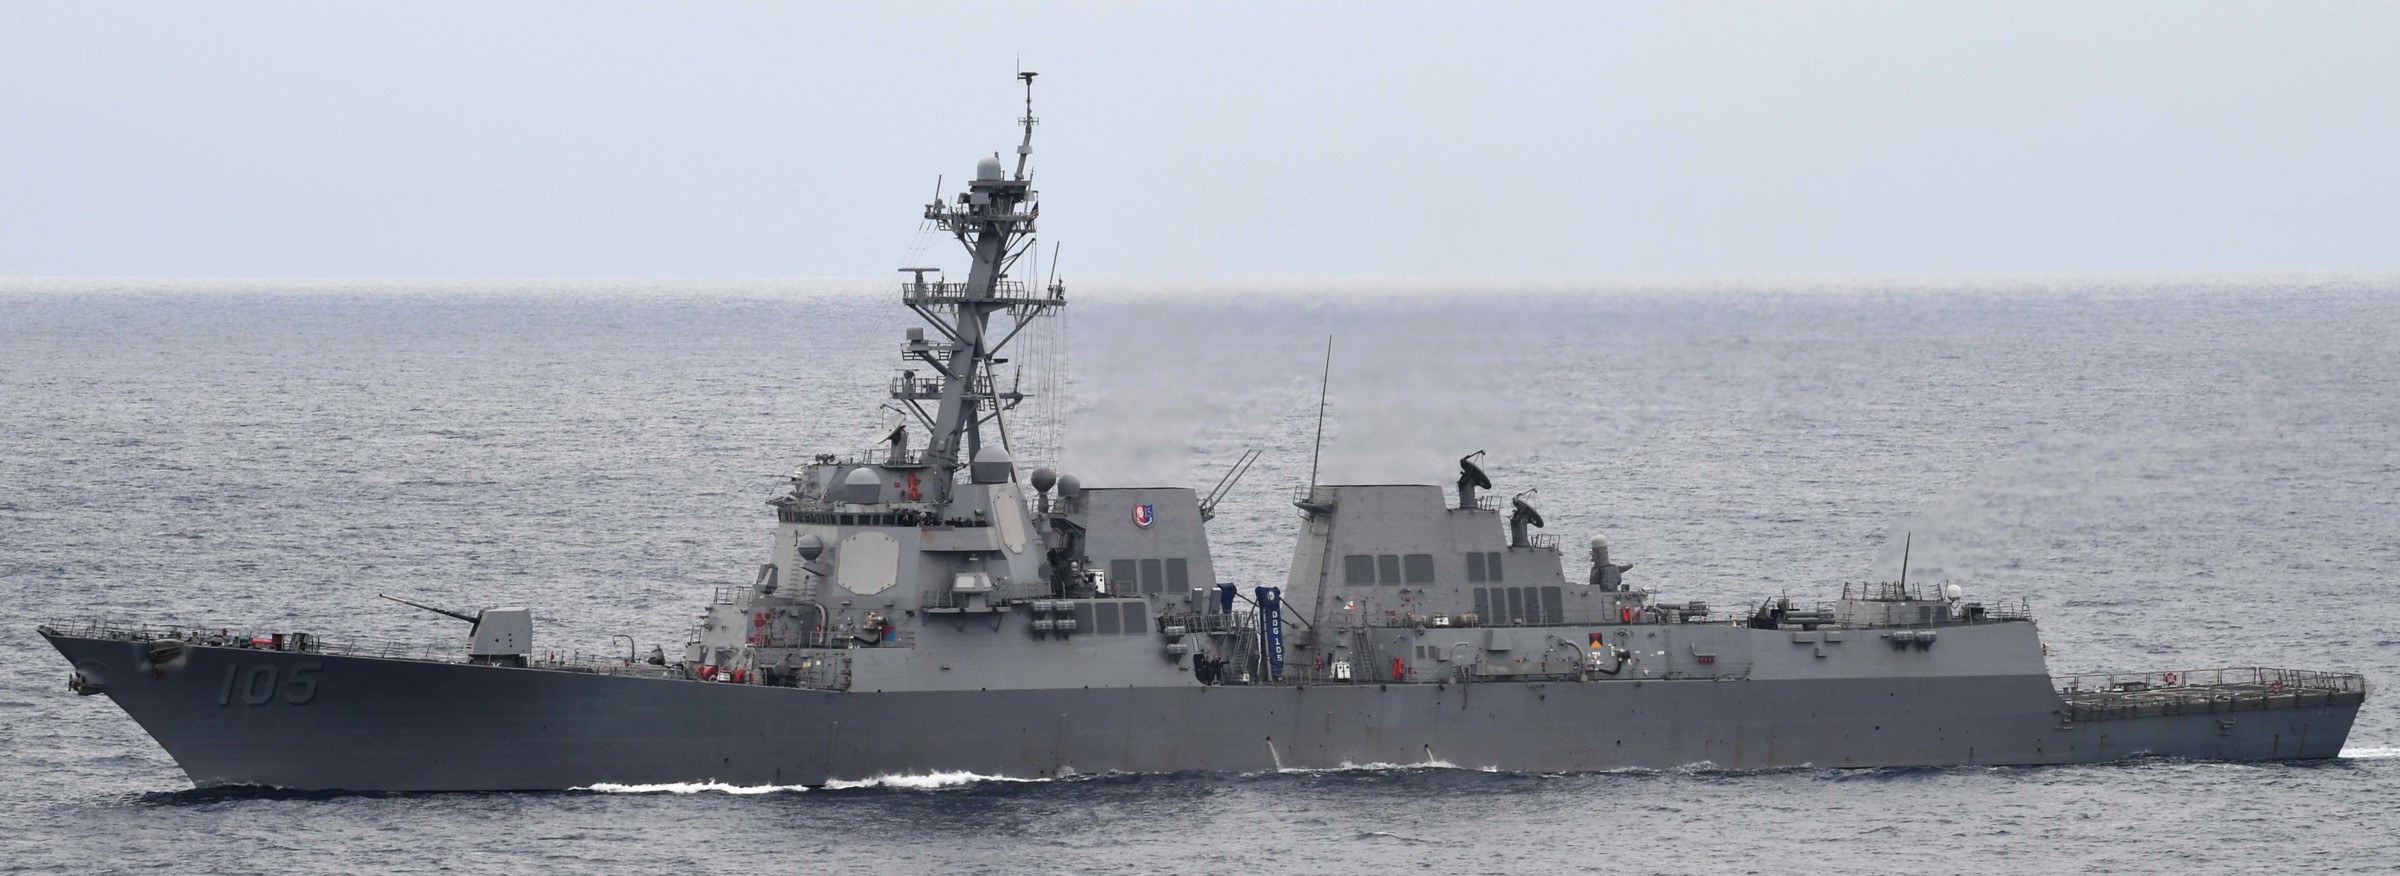 ddg-110 uss dewey arleigh burke class guided missile destroyer aegis us navy philippine sea 126